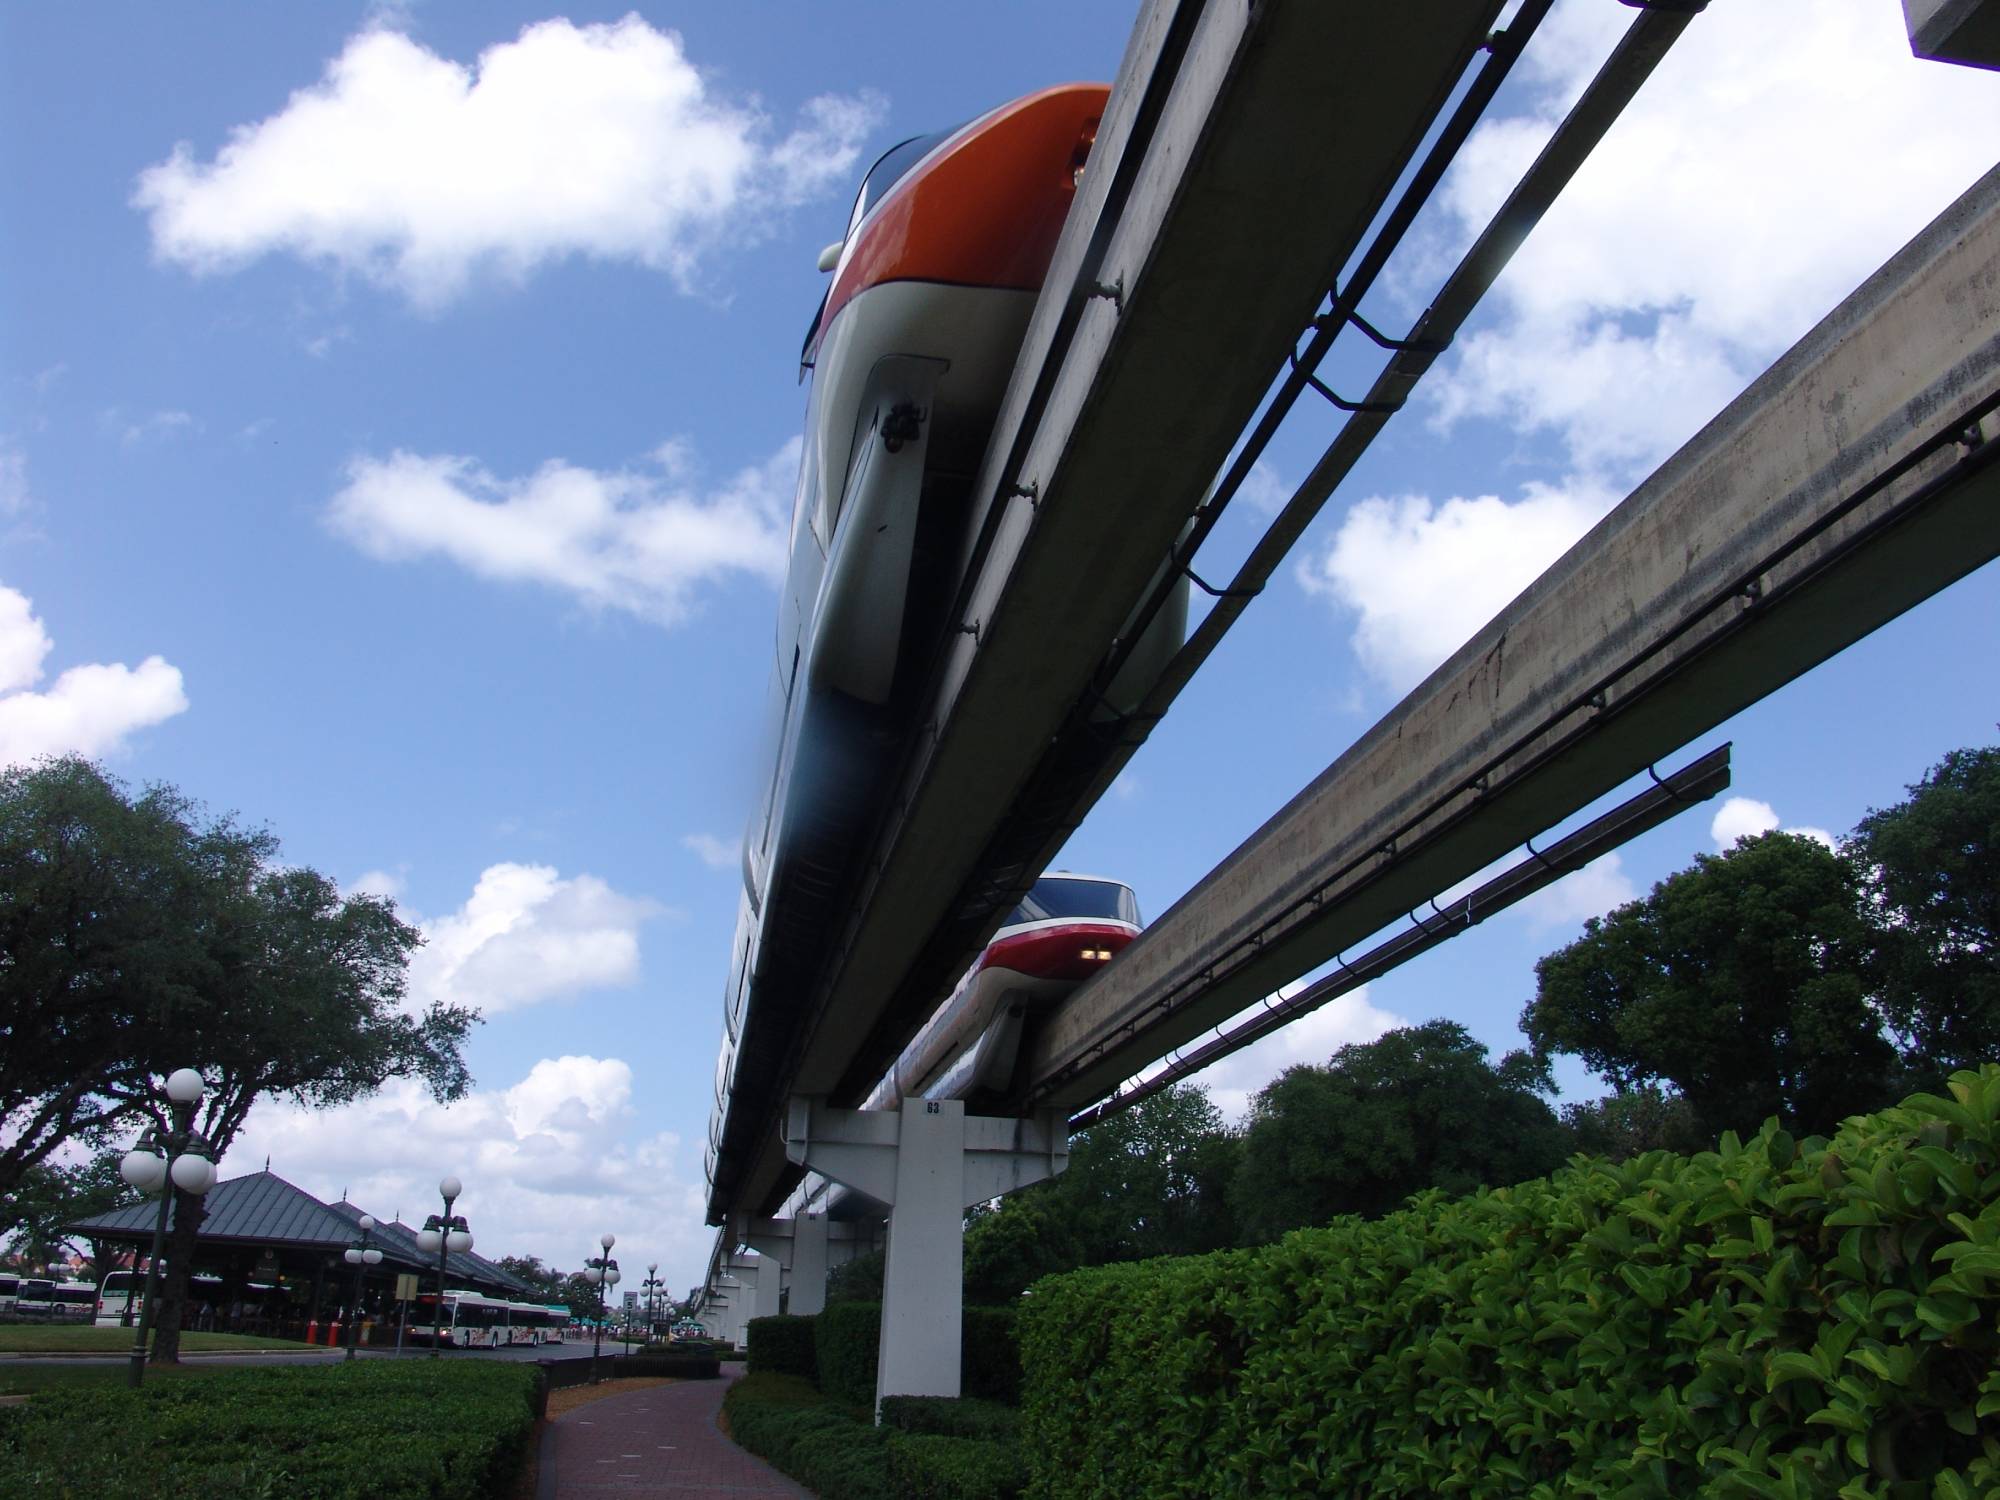 Monorails - gliding overhead